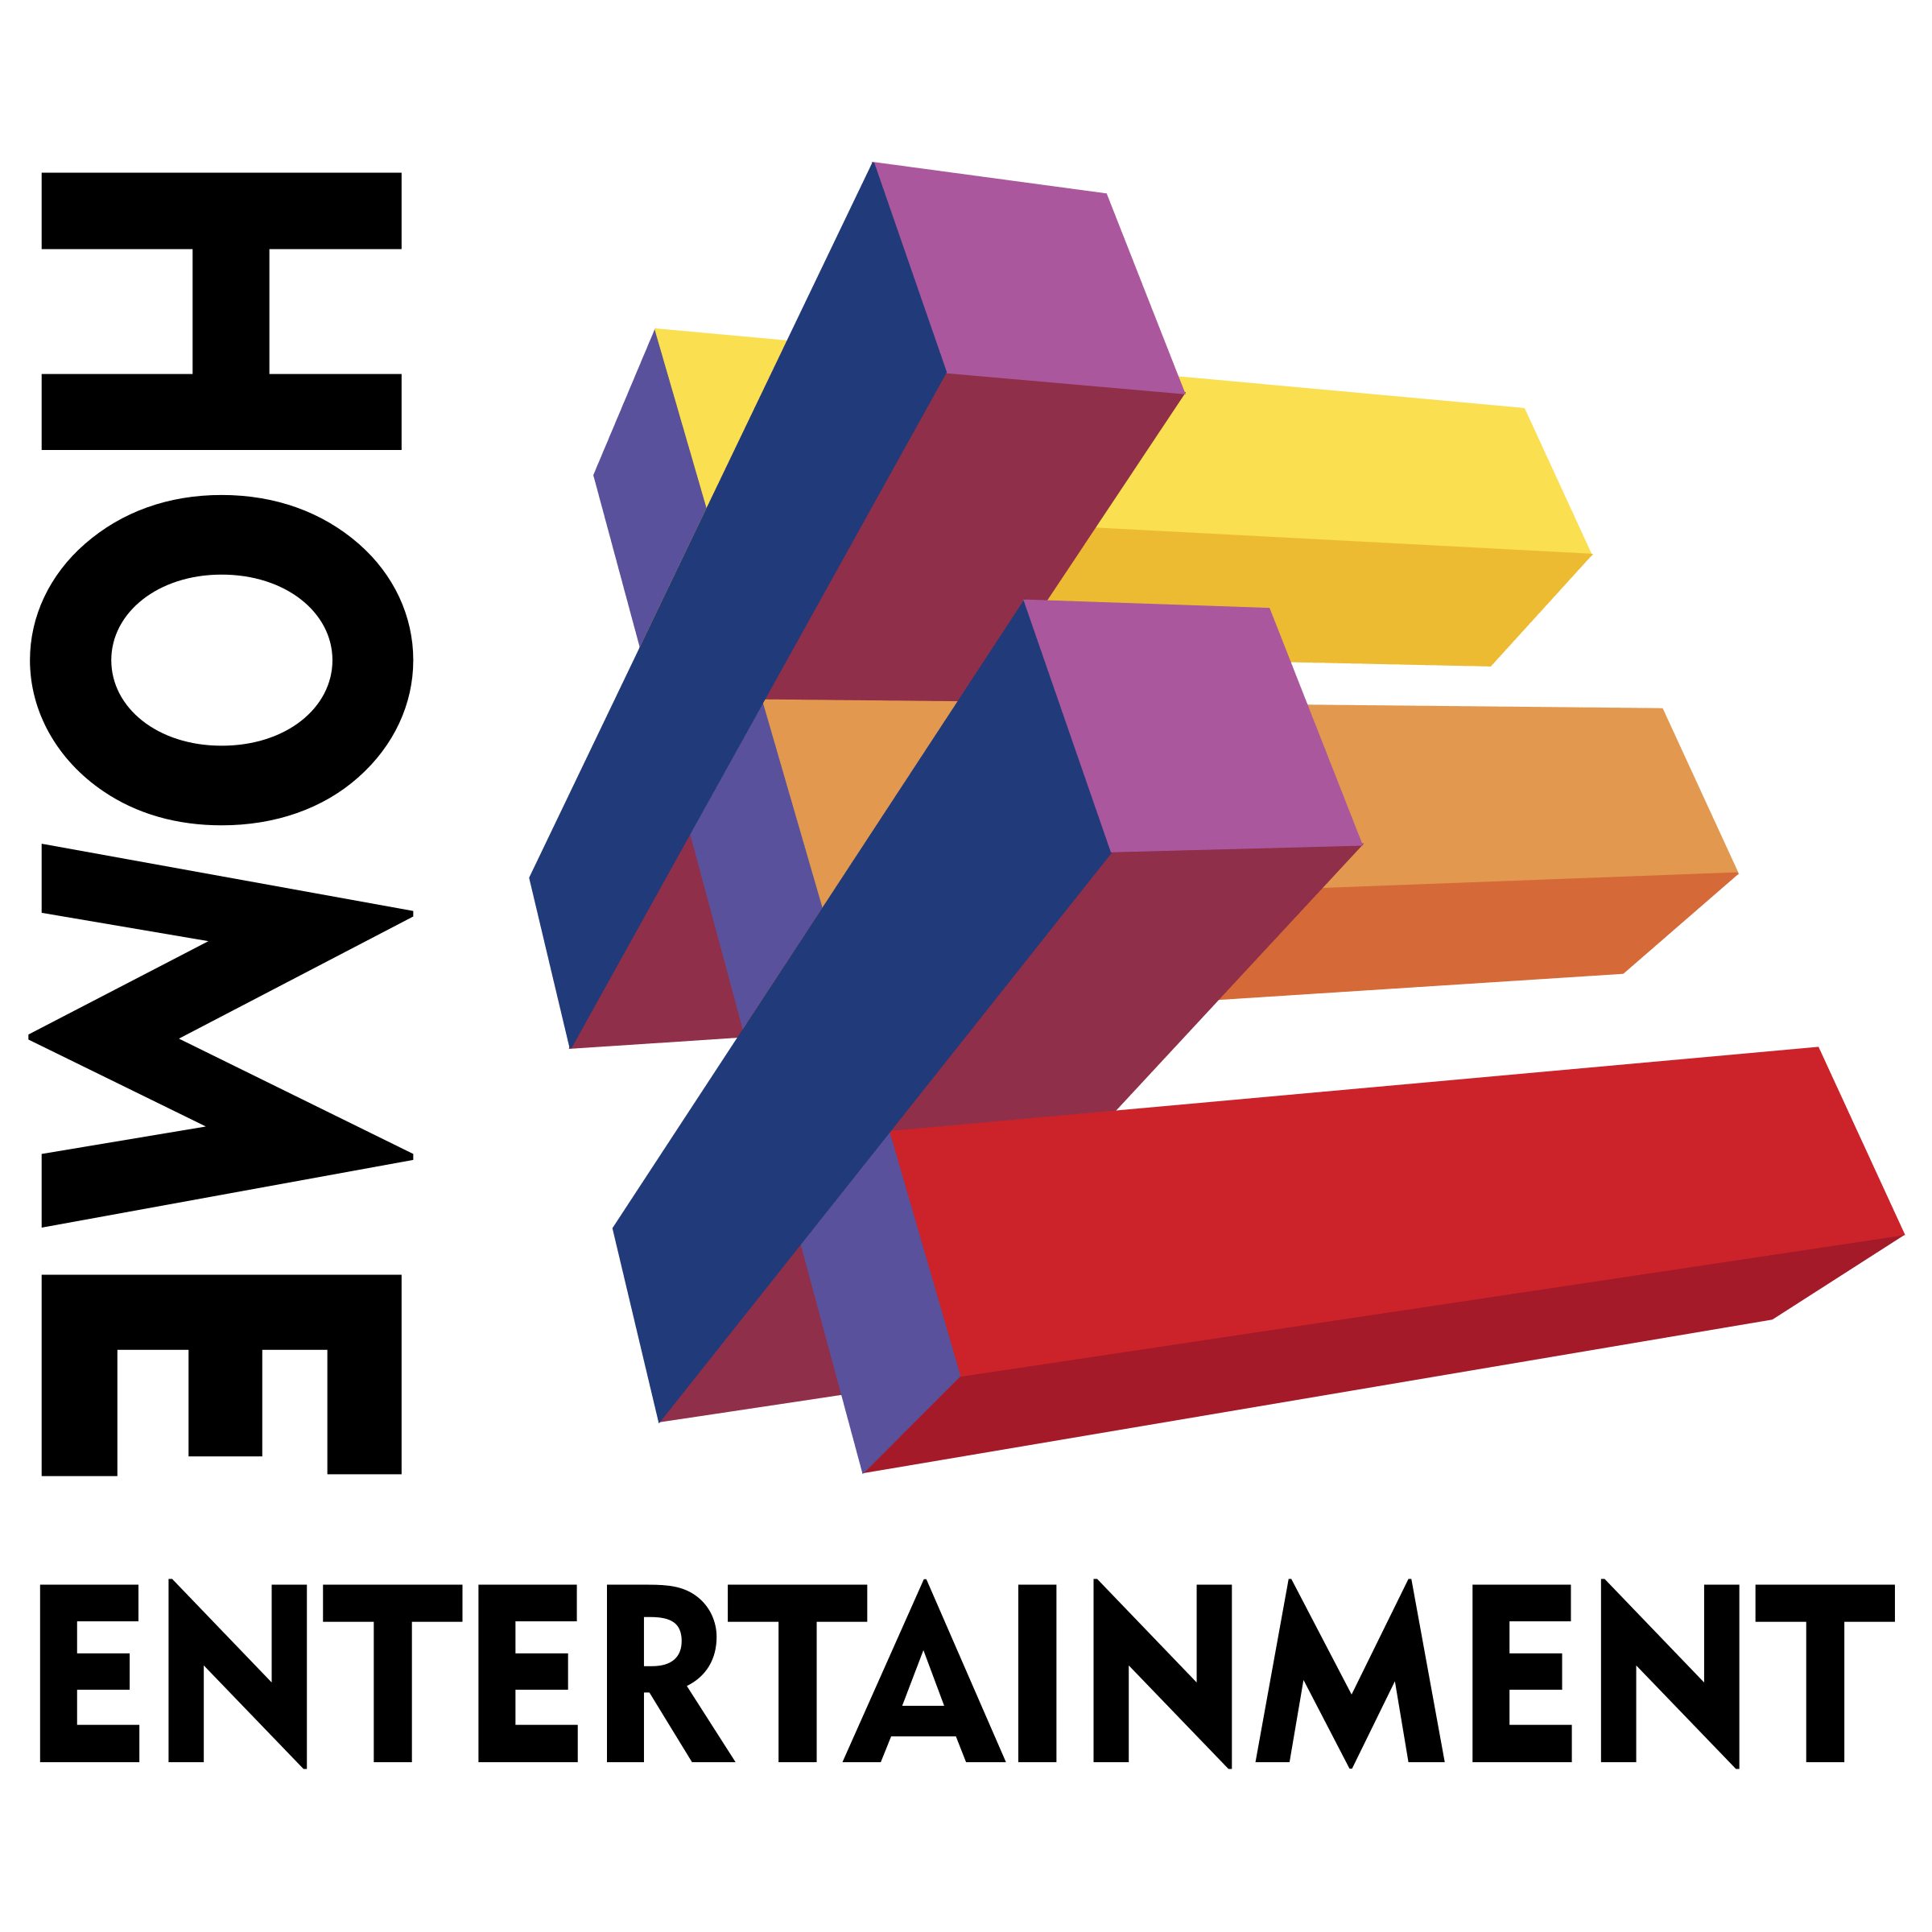 Home Entertainment Logo - Home Entertainment Logo PNG Transparent & SVG Vector